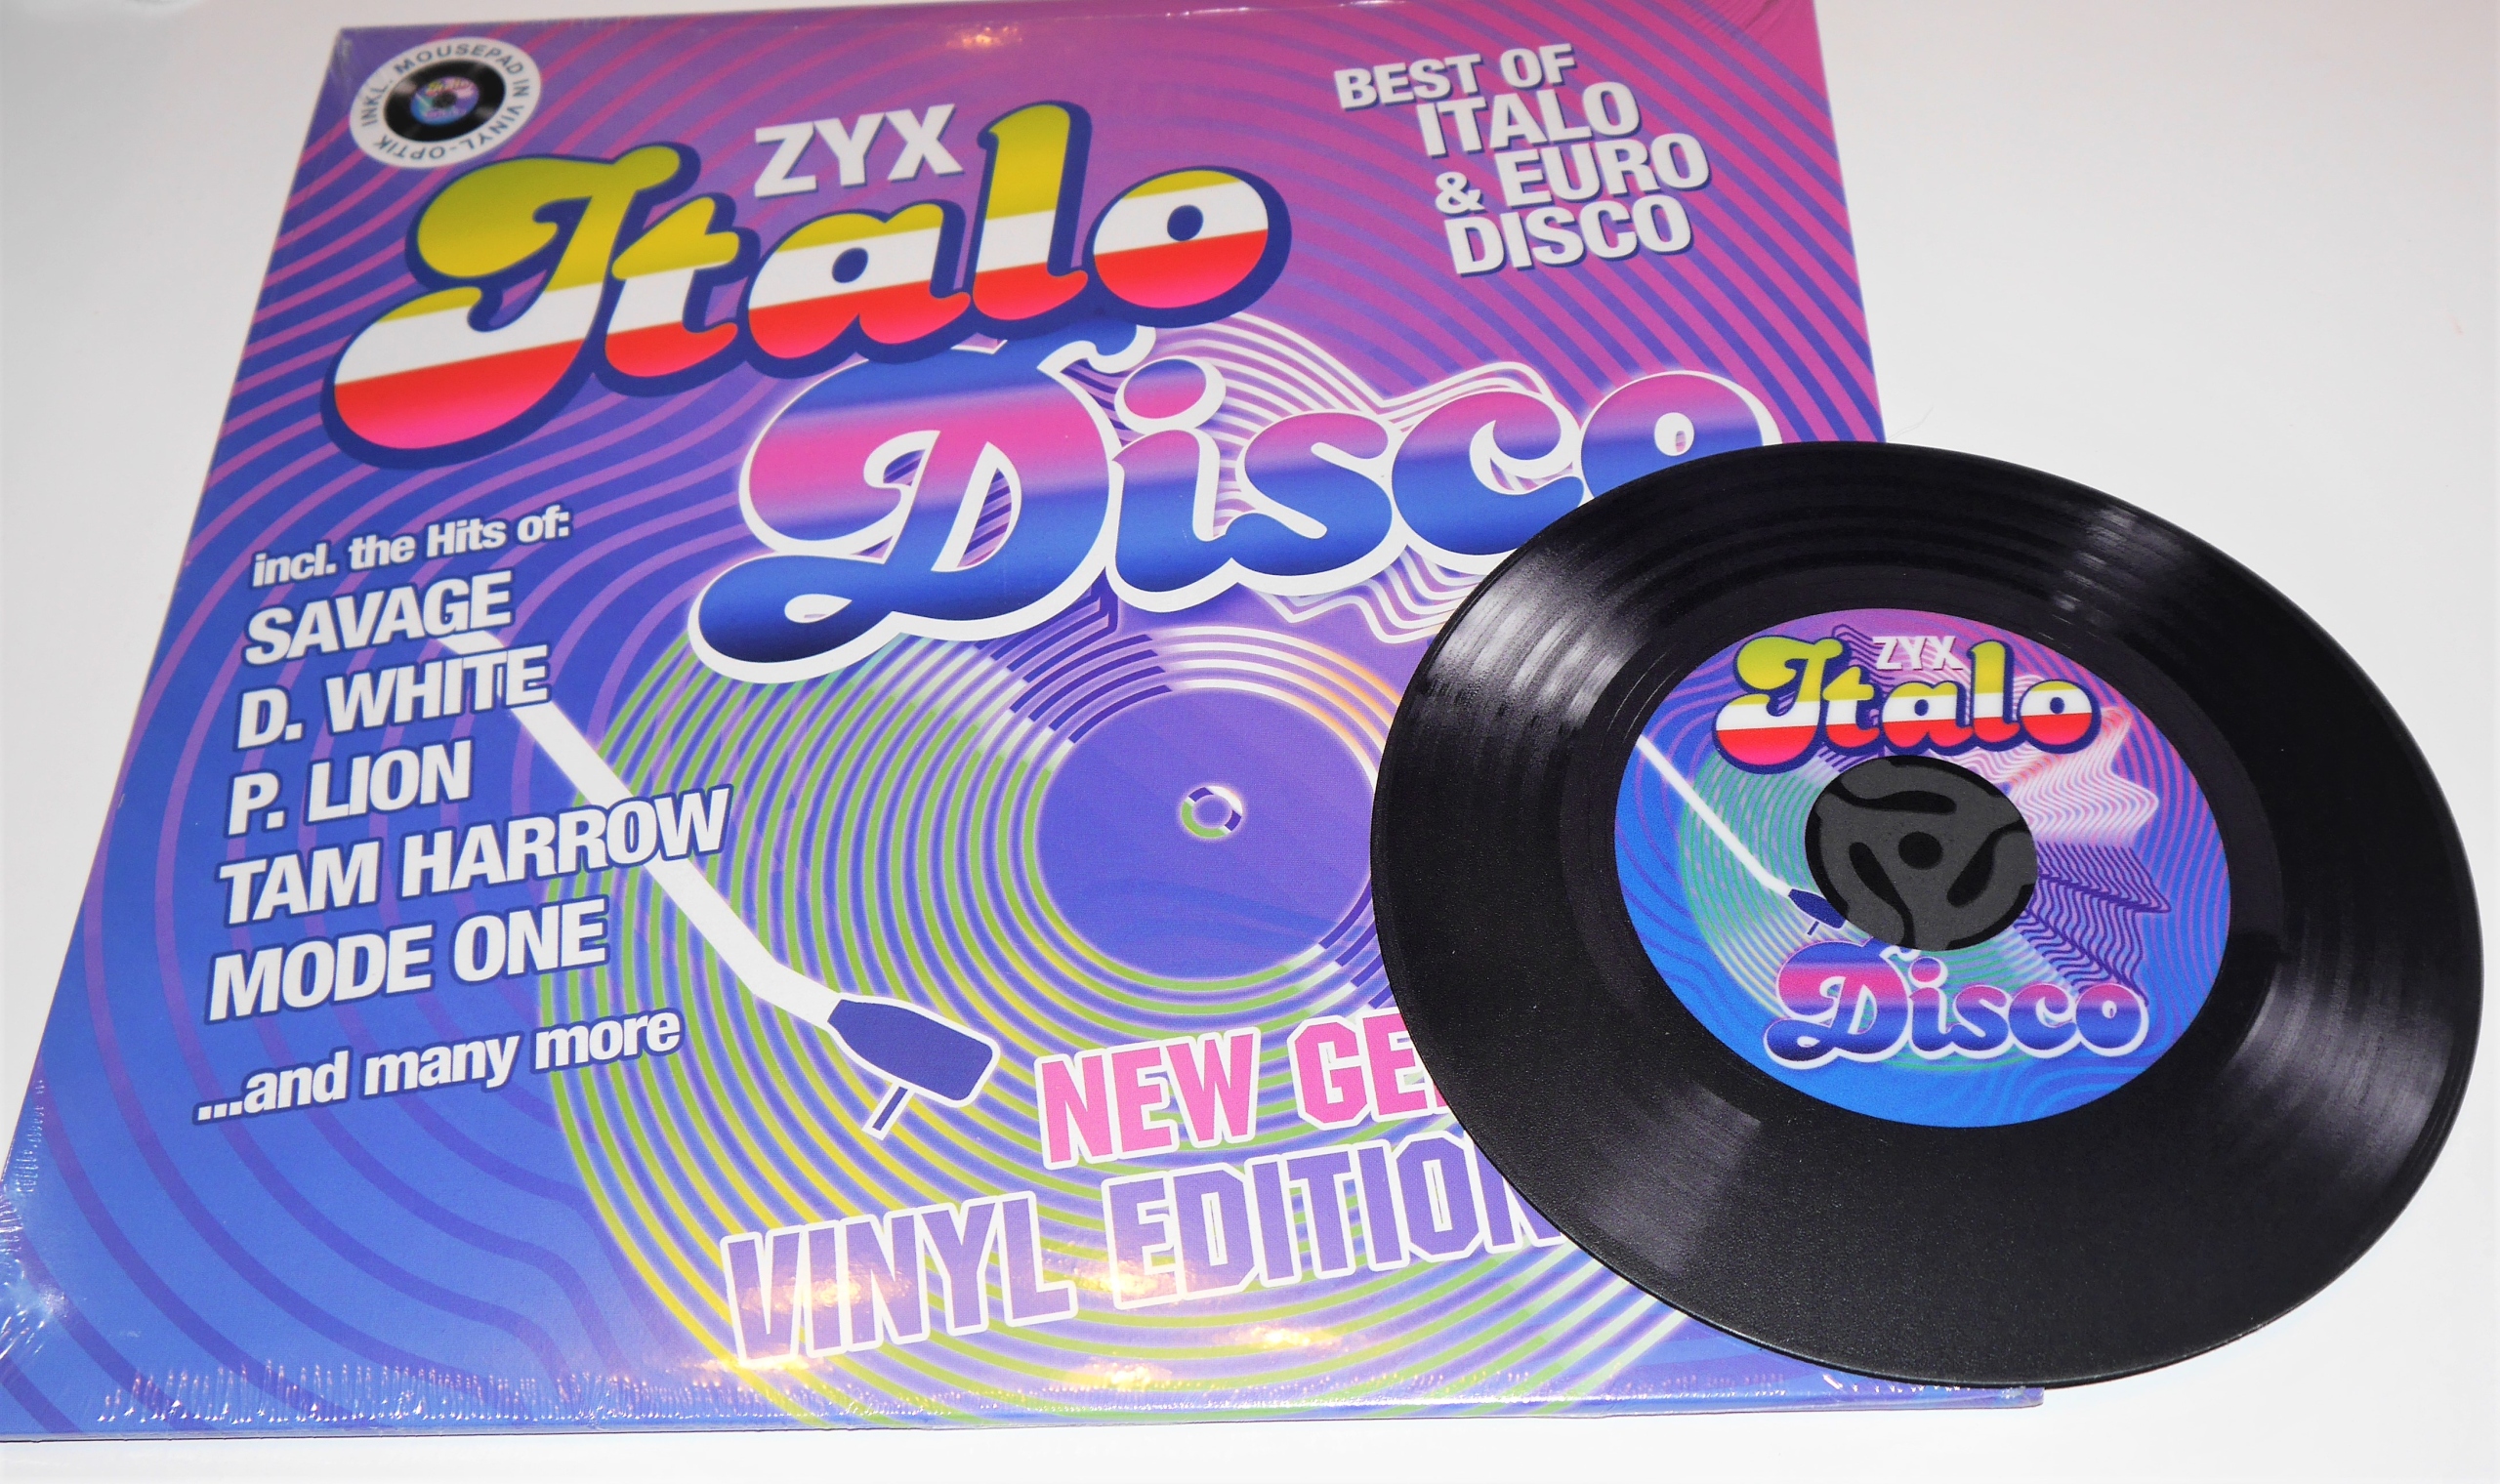 Zyx italo disco new generation vol 24. ZYX Italo Disco New Generation:Vinyl Edition Vol.2.